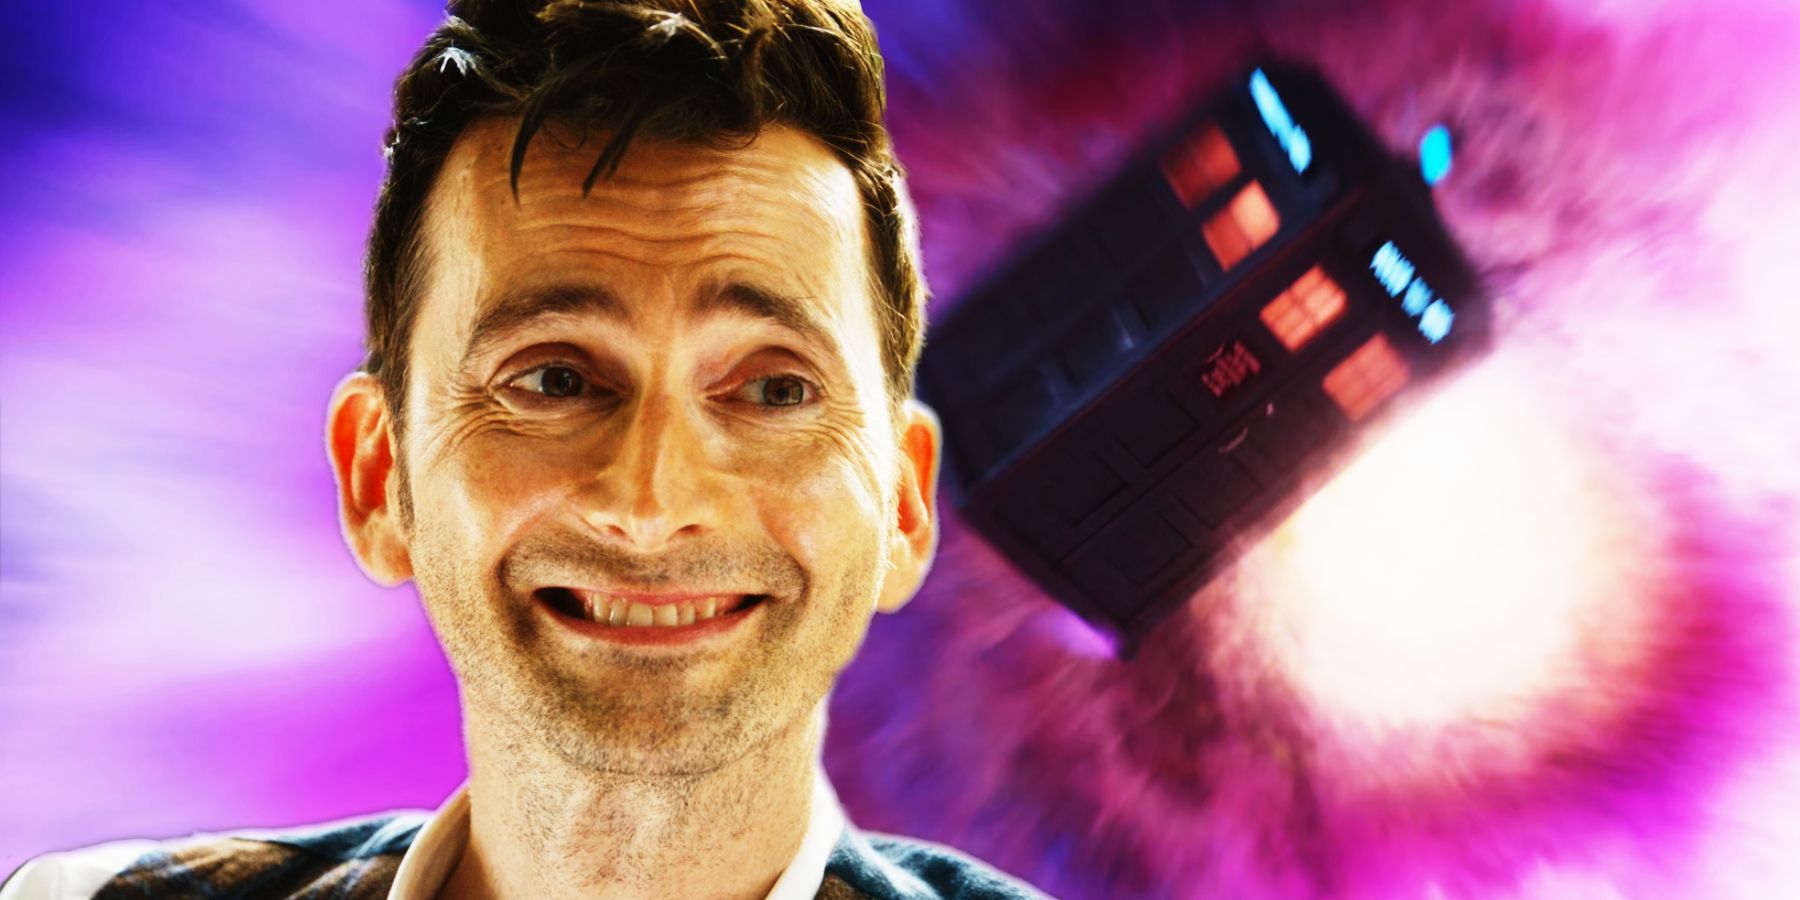 David Tennant smiles as the TARDIS flies through the vortex behind him